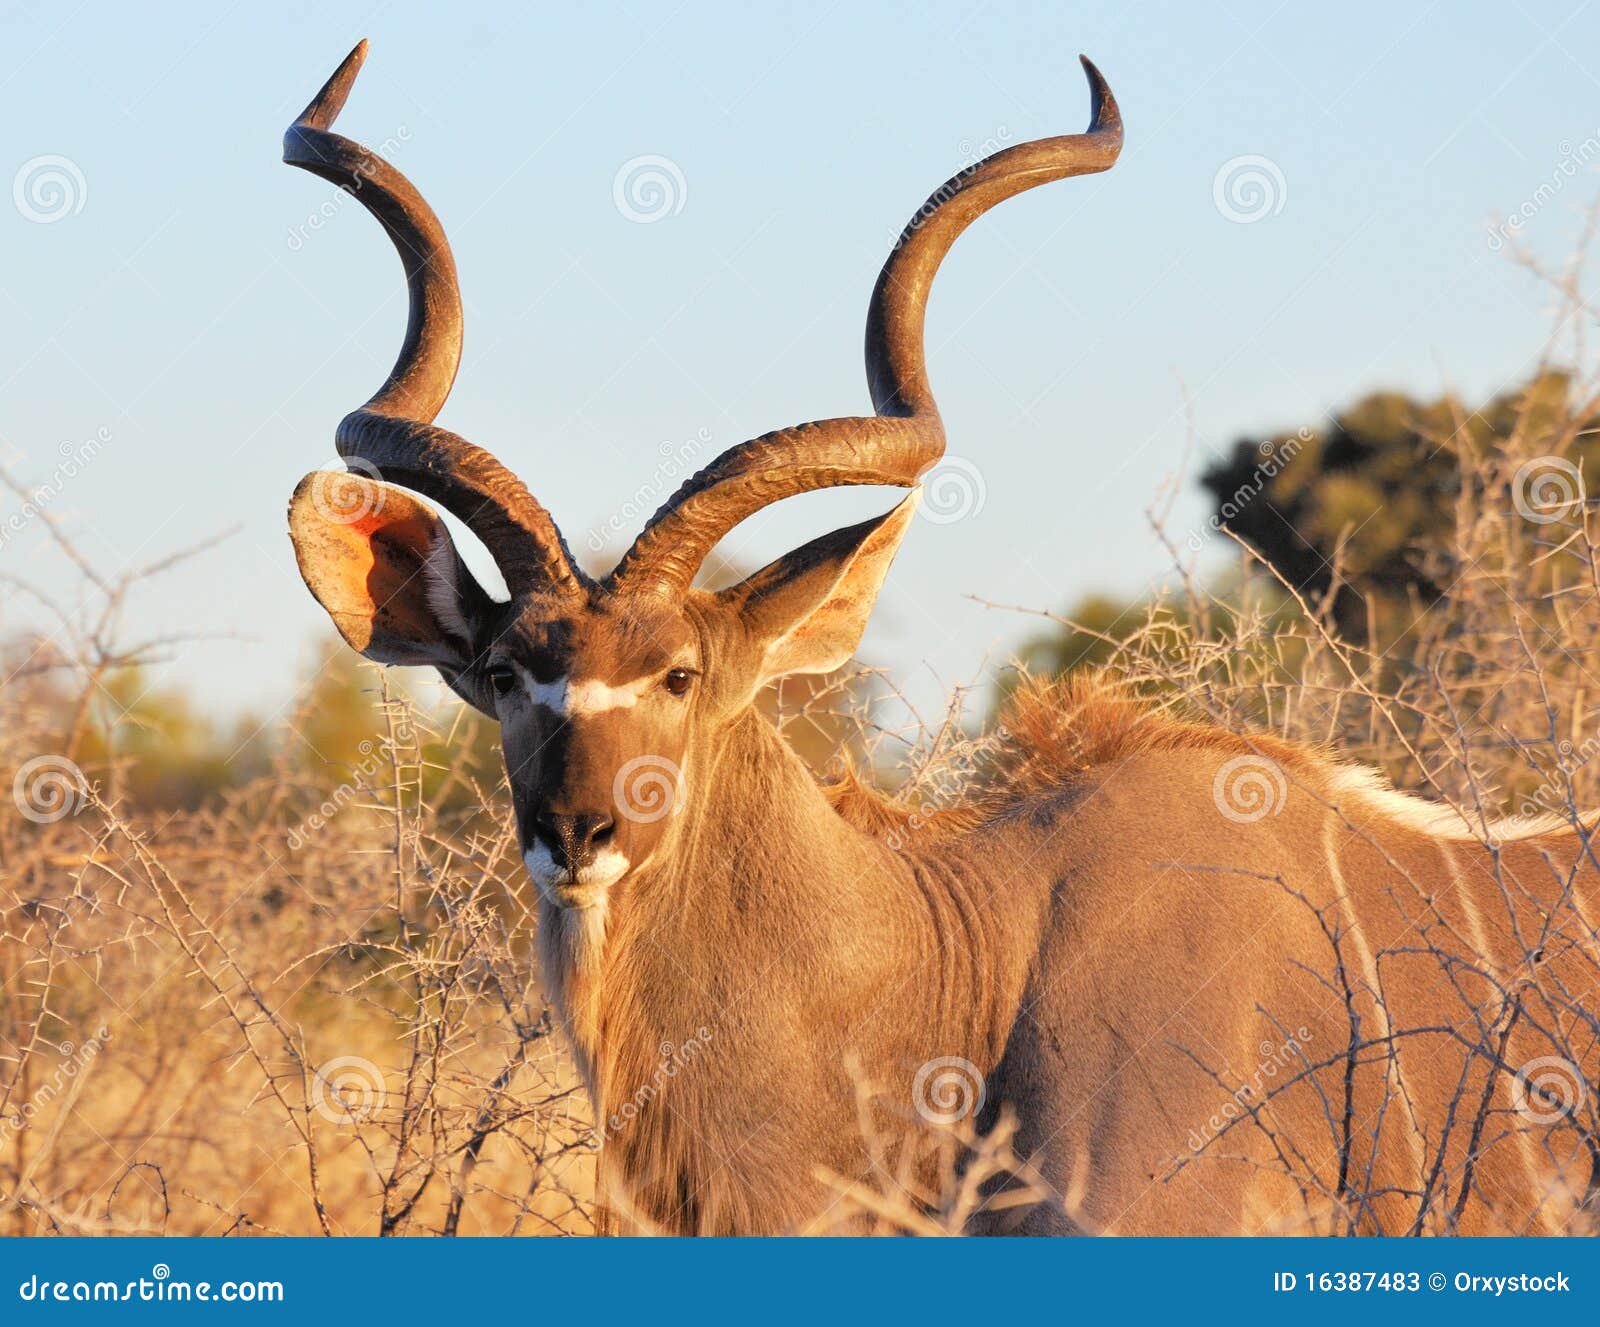 male kudu in etosha